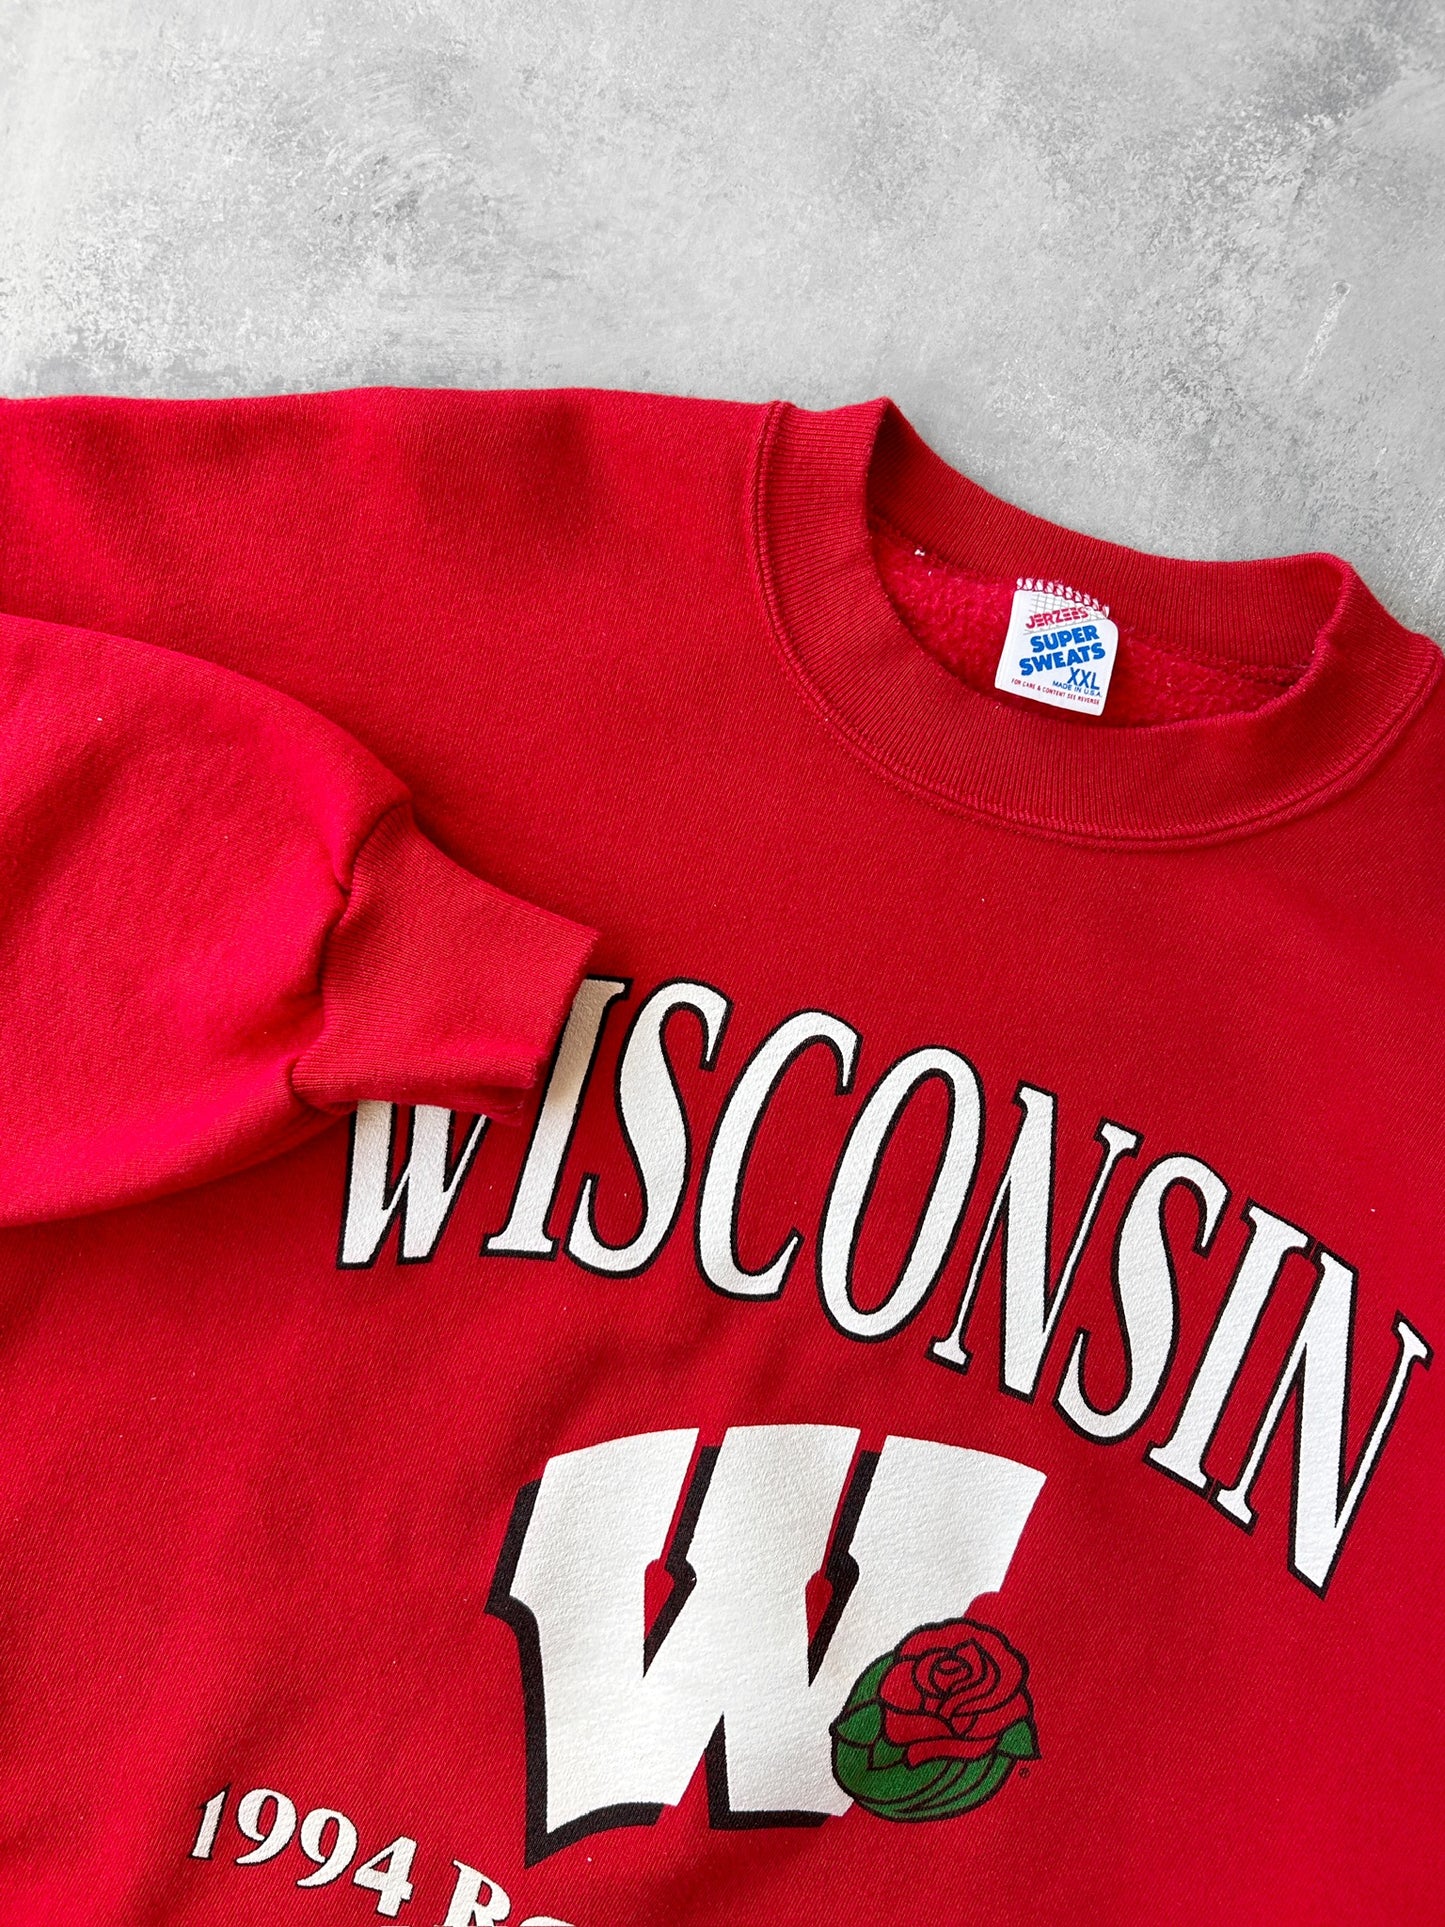 University of Wisconsin Rose Bowl Sweatshirt '94 - XL